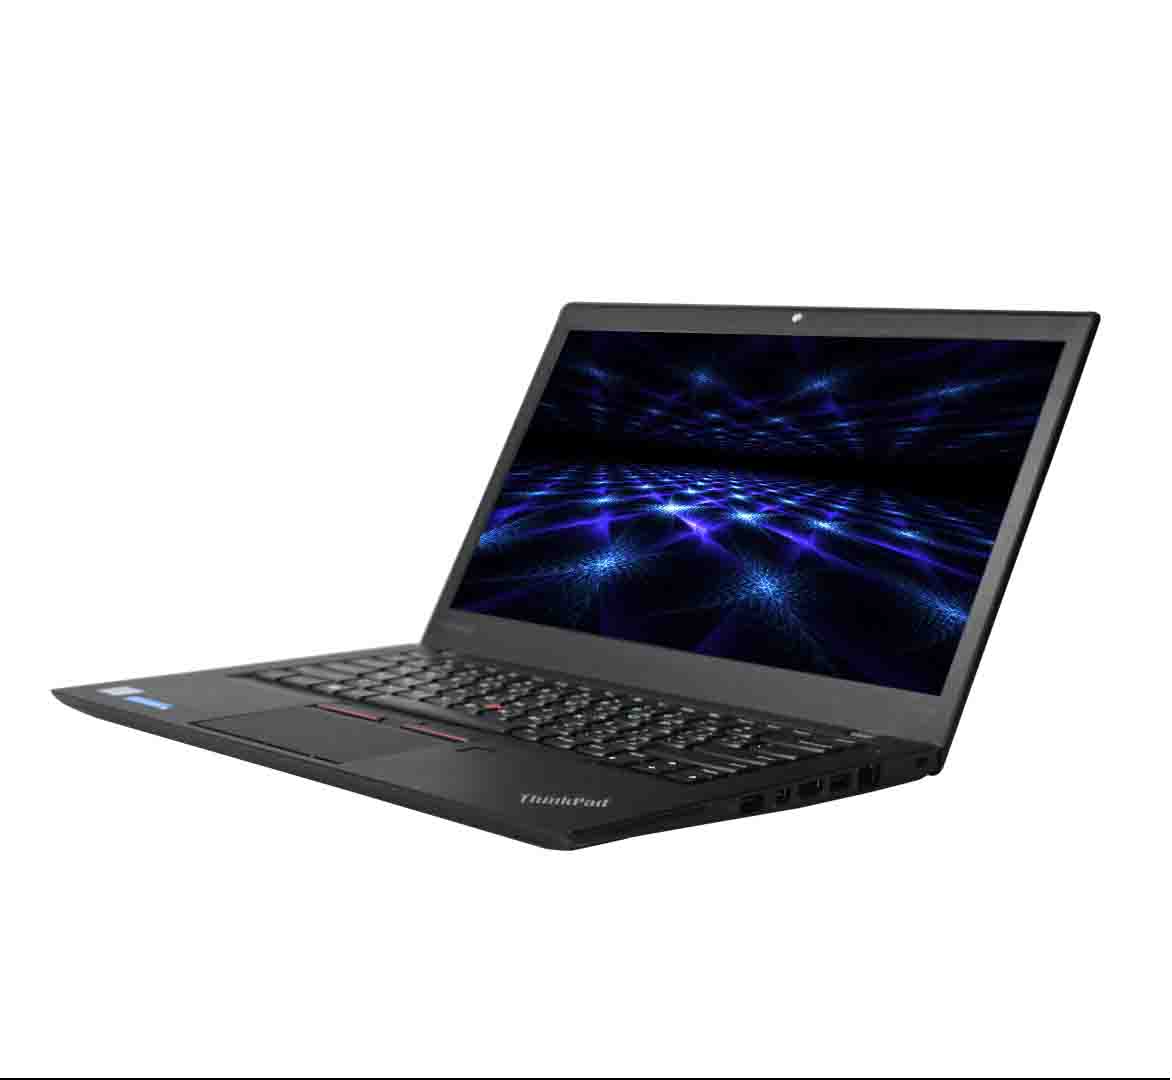 Lenovo Thinkpad T460s Ultrabook Laptop, Intel Core i7-6th Gen. CPU, 20GB DDR4 RAM, 256GB SSD, 14.1 inch Display, Windows 10 Pro, Refurbished Laptop